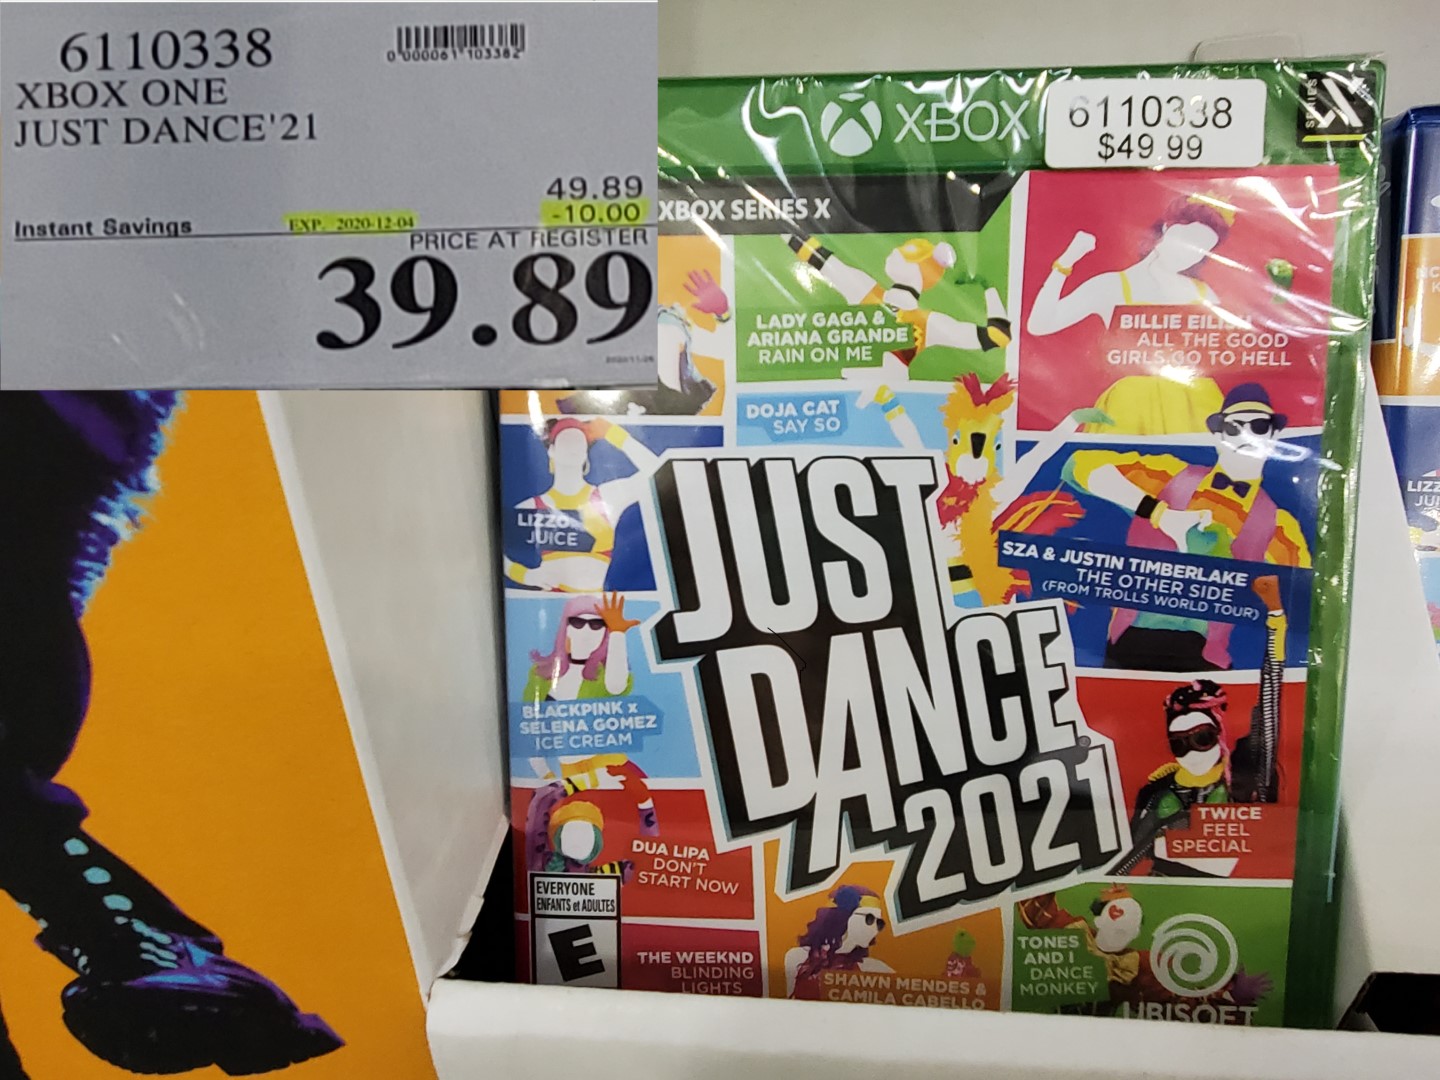 Xbox just dance 2021